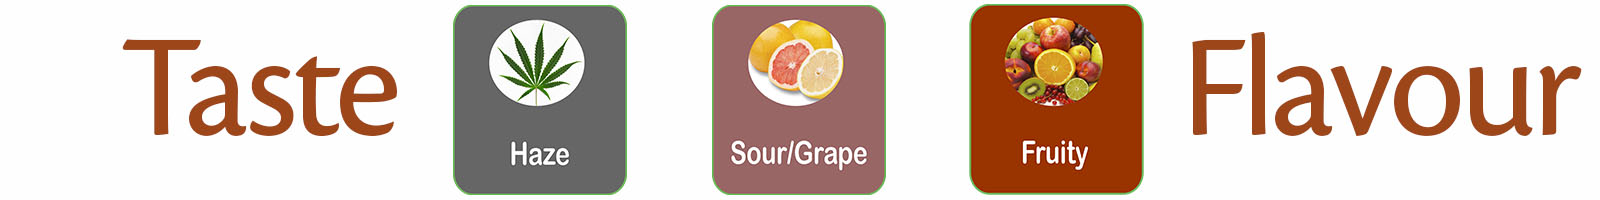 Silverfields taste profile from haze to fruity grape influences